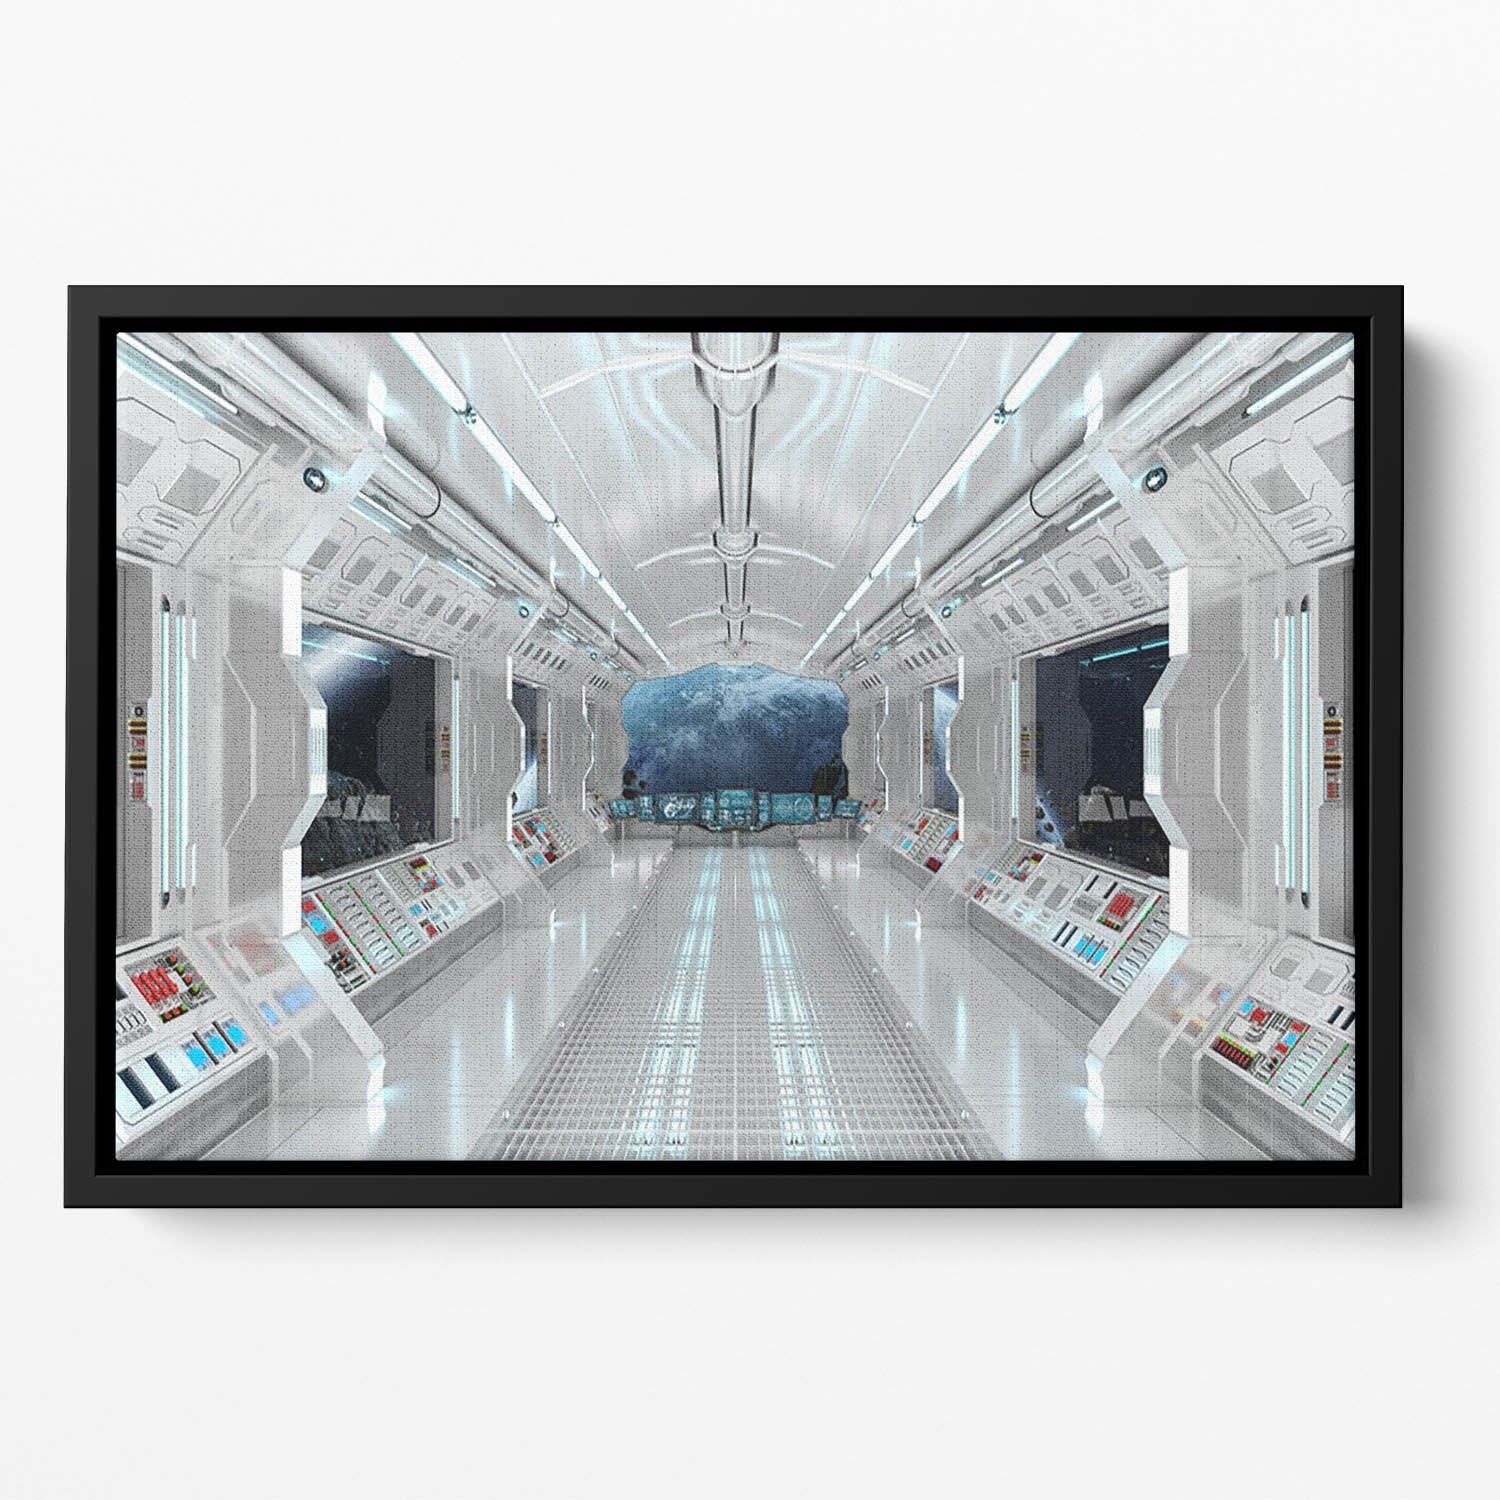 Inside Space Shuttle Floating Framed Canvas